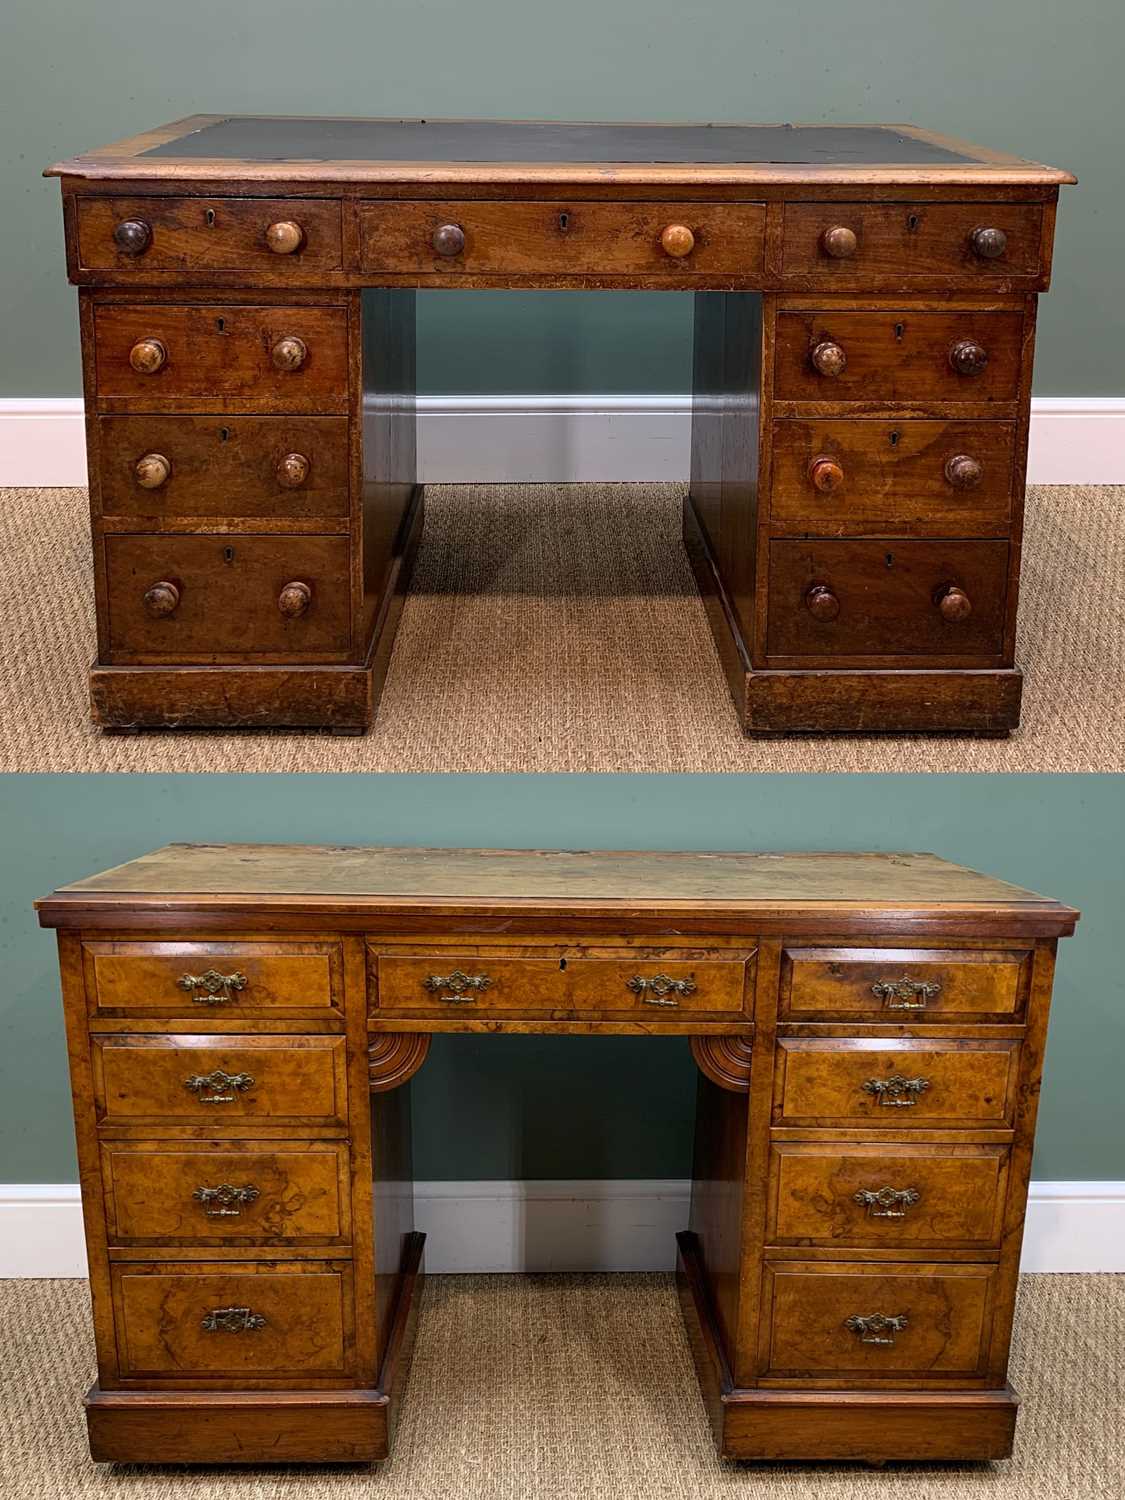 BURR WALNUT PEDESTAL DESK & ANOTHER, walnut desk c. 1890, 78h x 121w x 53cms d, other with inset